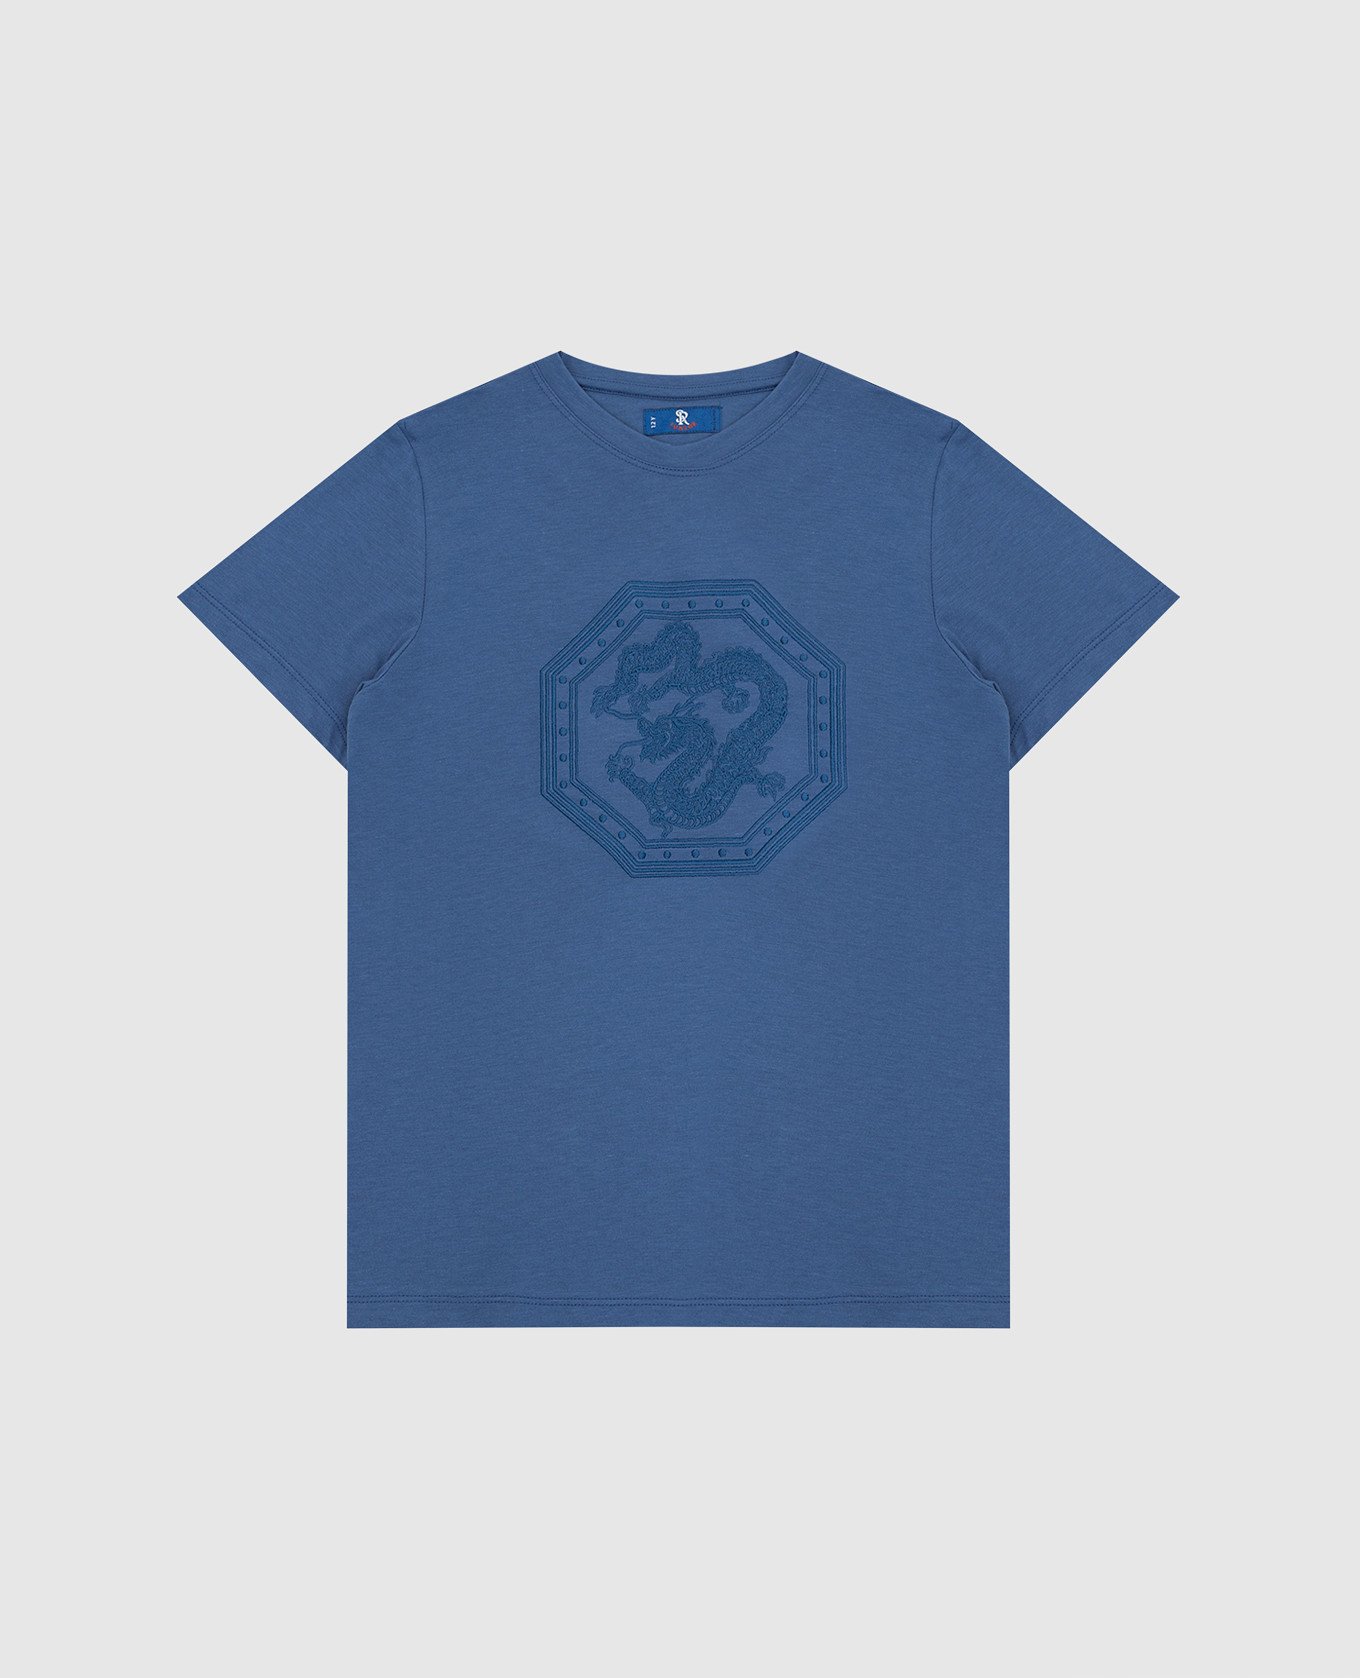 Stefano Ricci Детская синяя футболка с вышивкой YNH7200050803